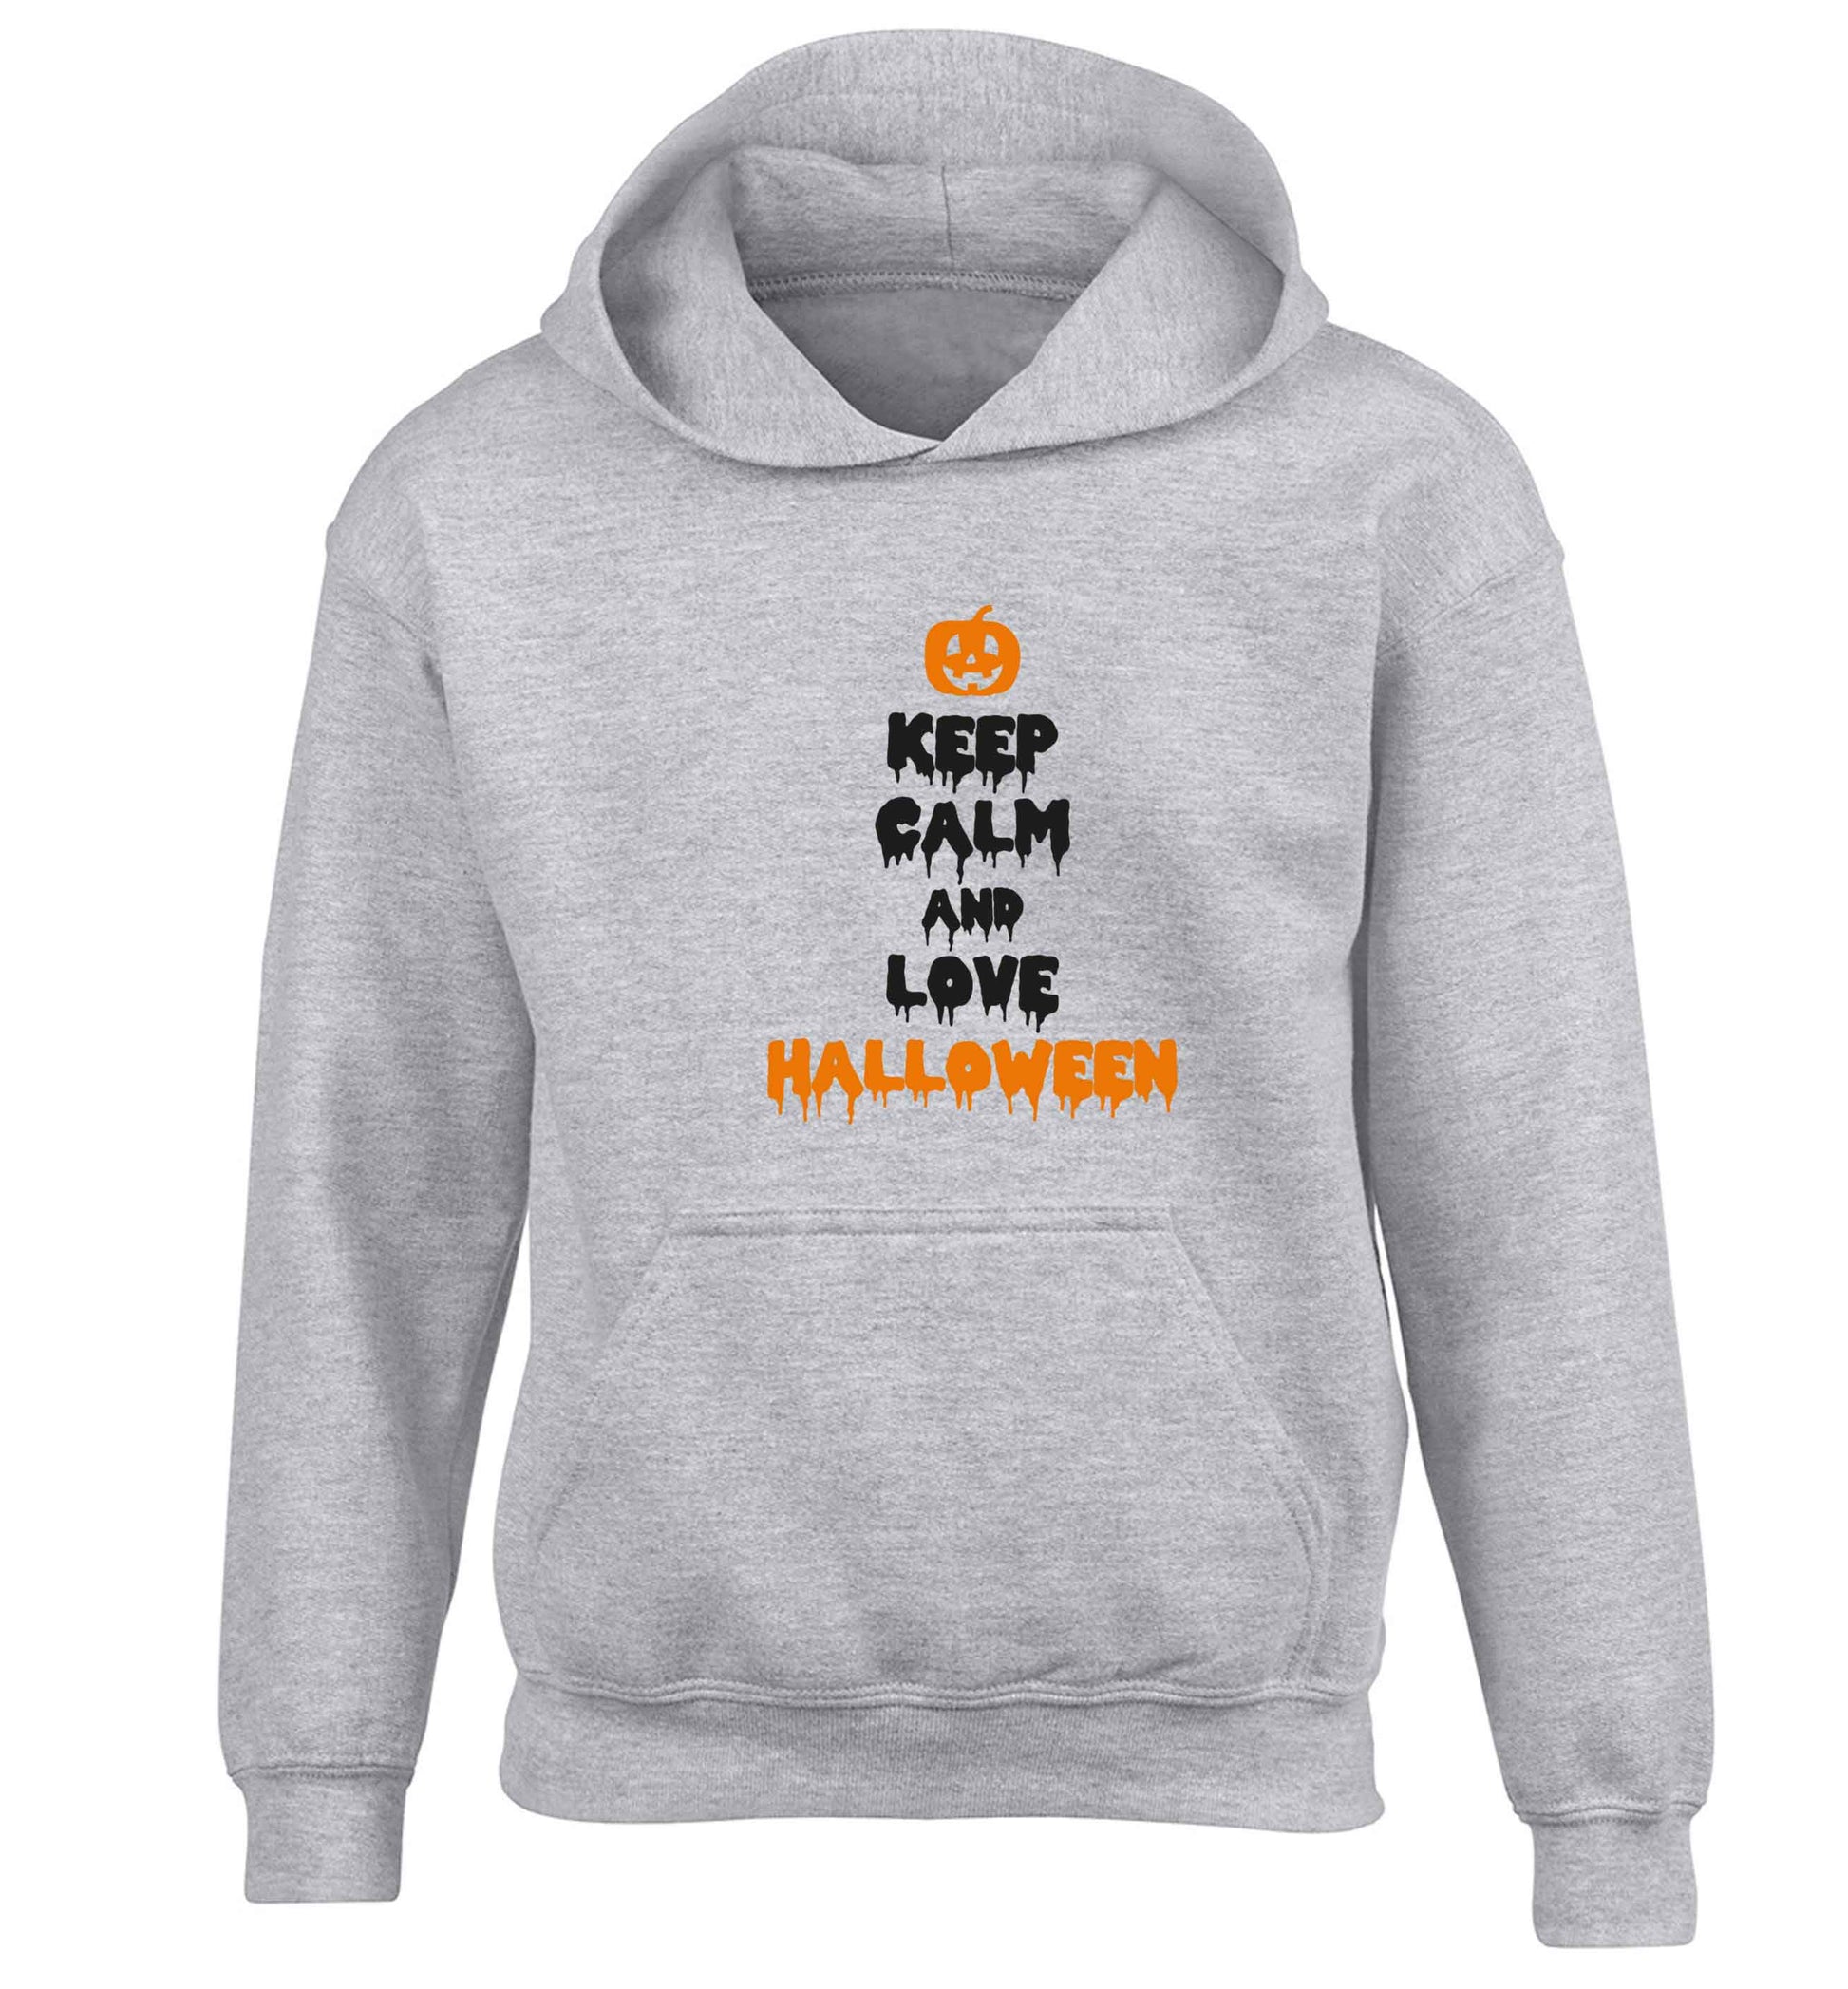 Keep calm and love halloween children's grey hoodie 12-13 Years